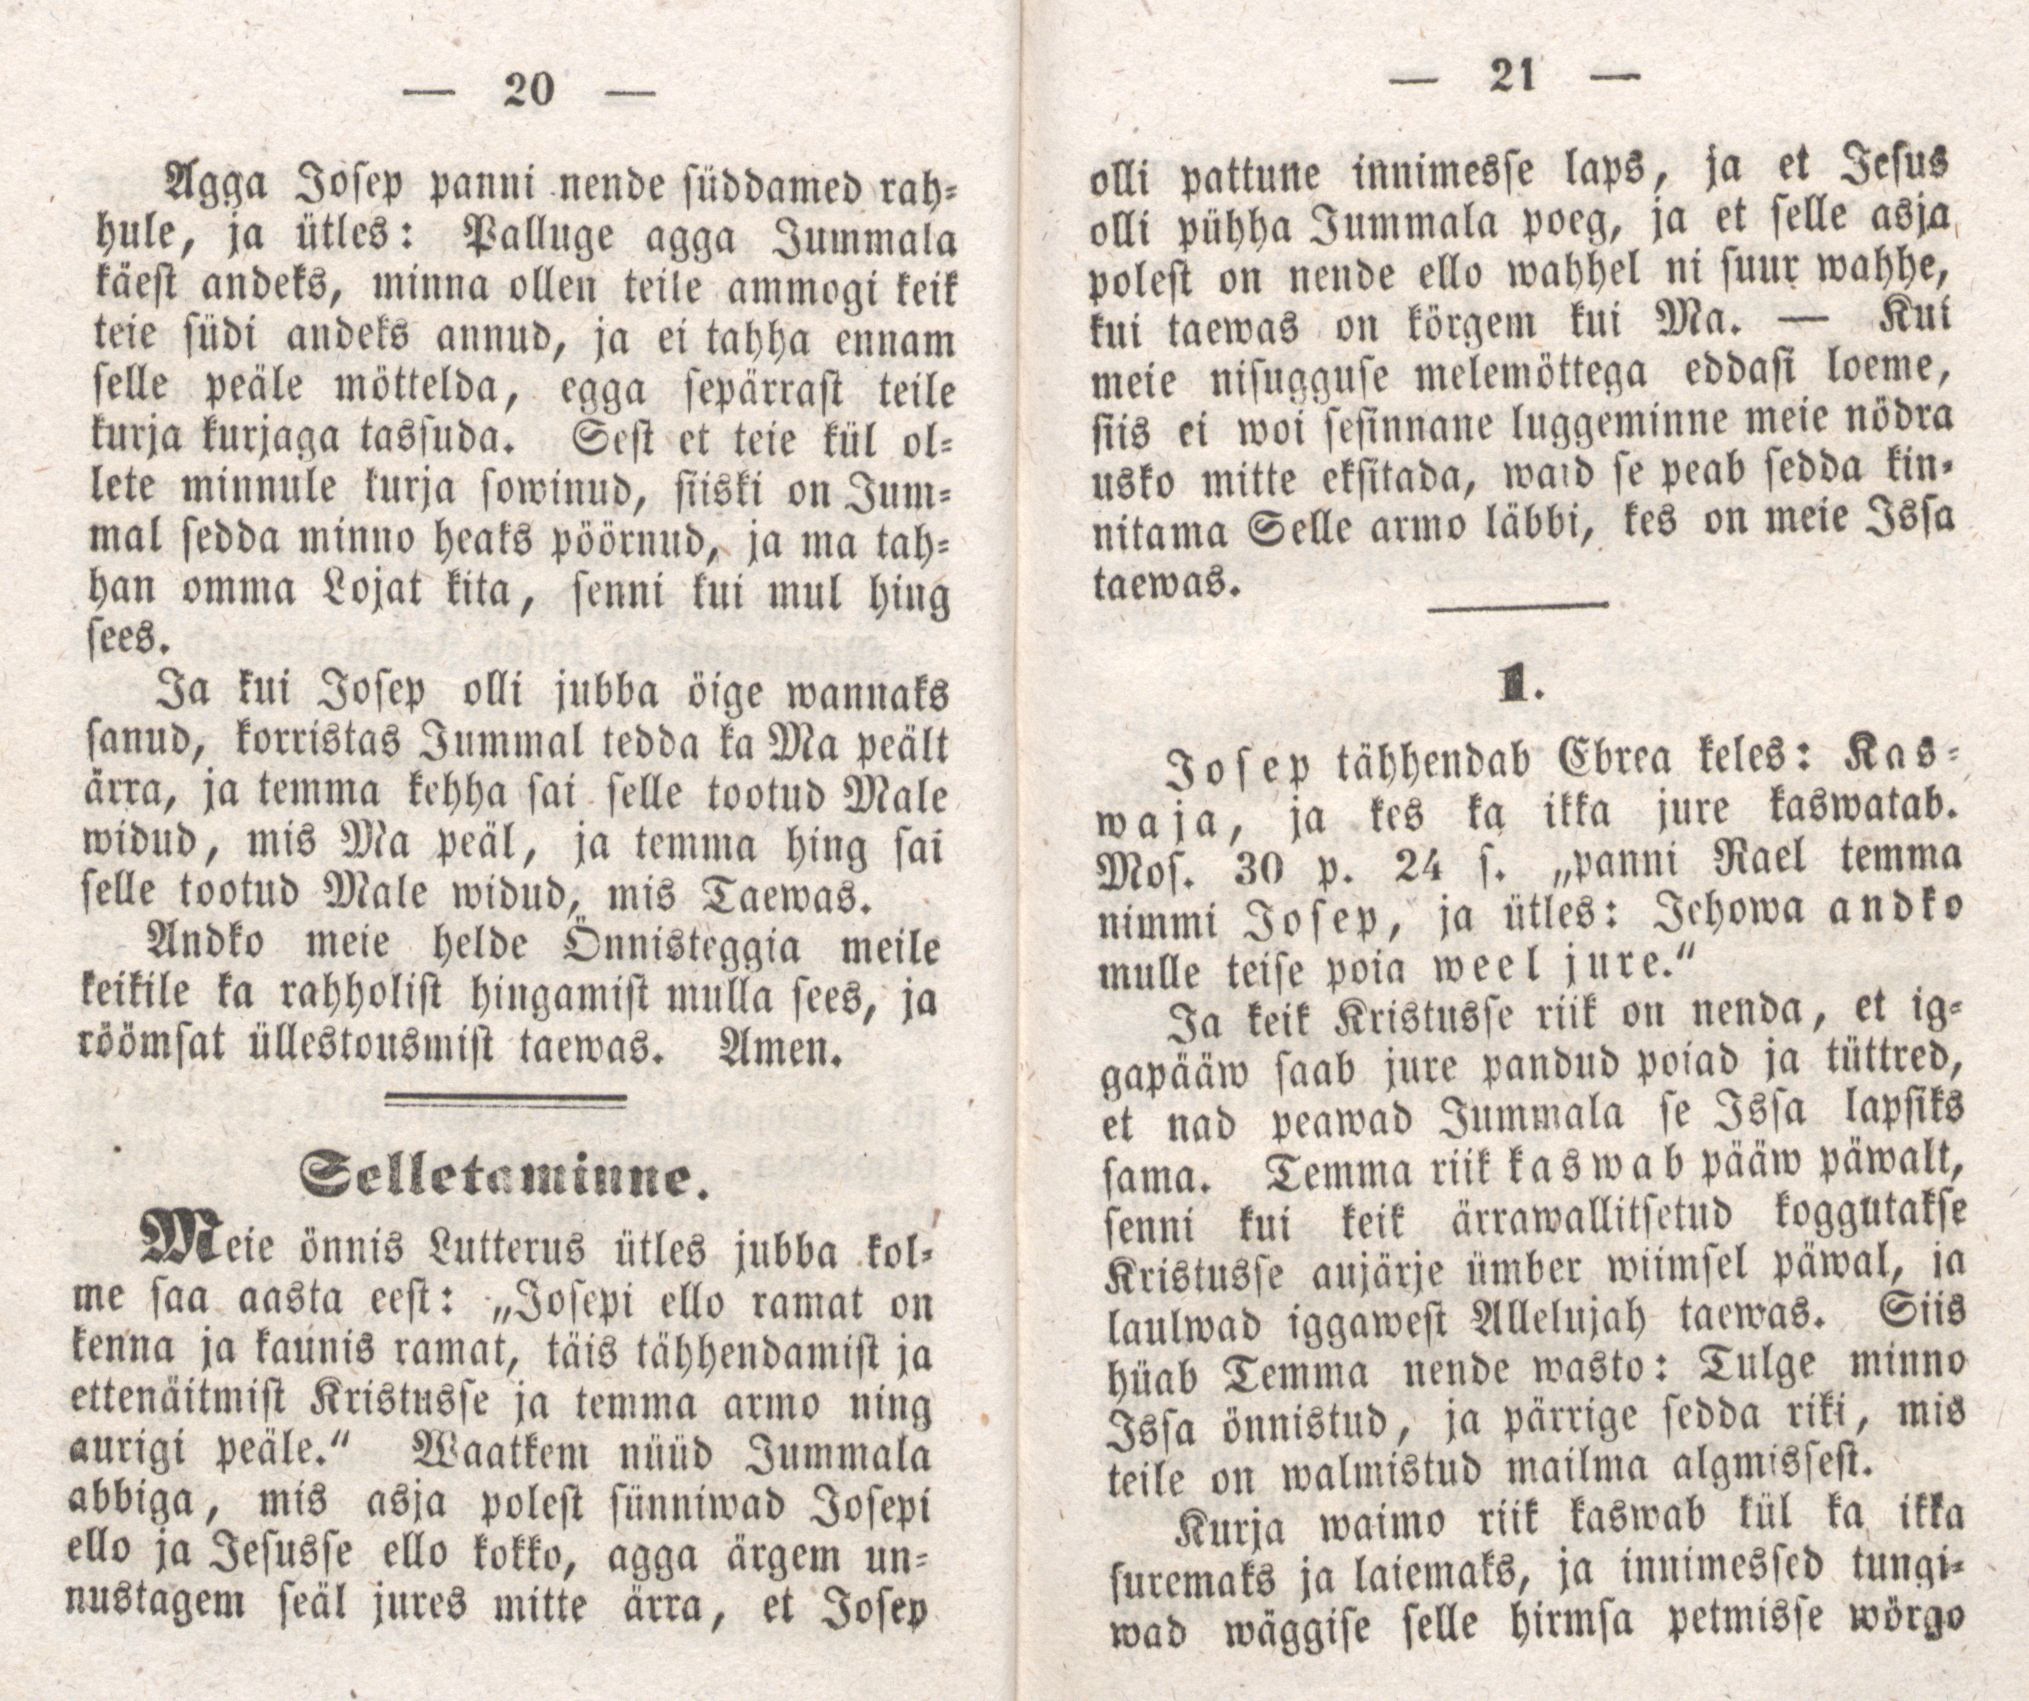 Josepi elloramat (1850) | 13. (20-21) Основной текст